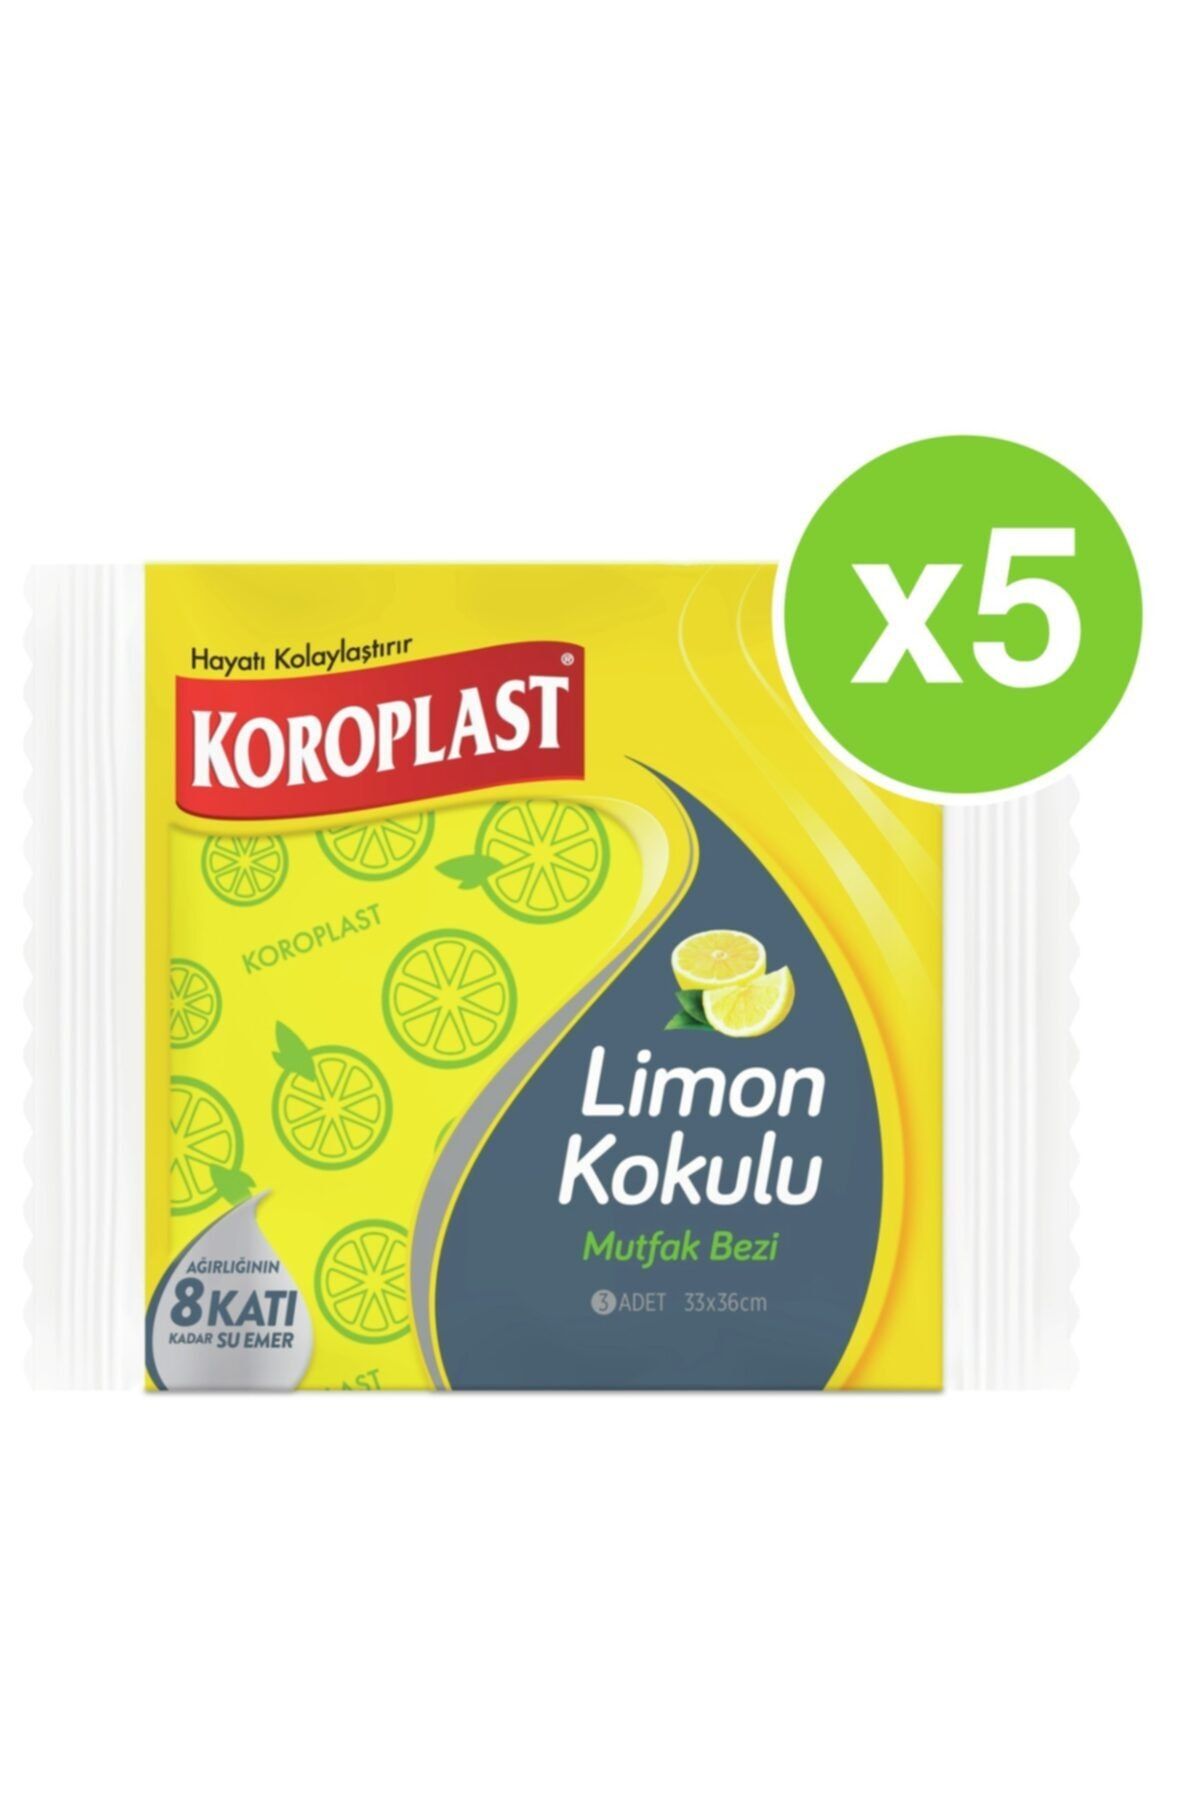 Koroplast Limon Kokulu Mutfak Bezi 3lü X 5 Paket